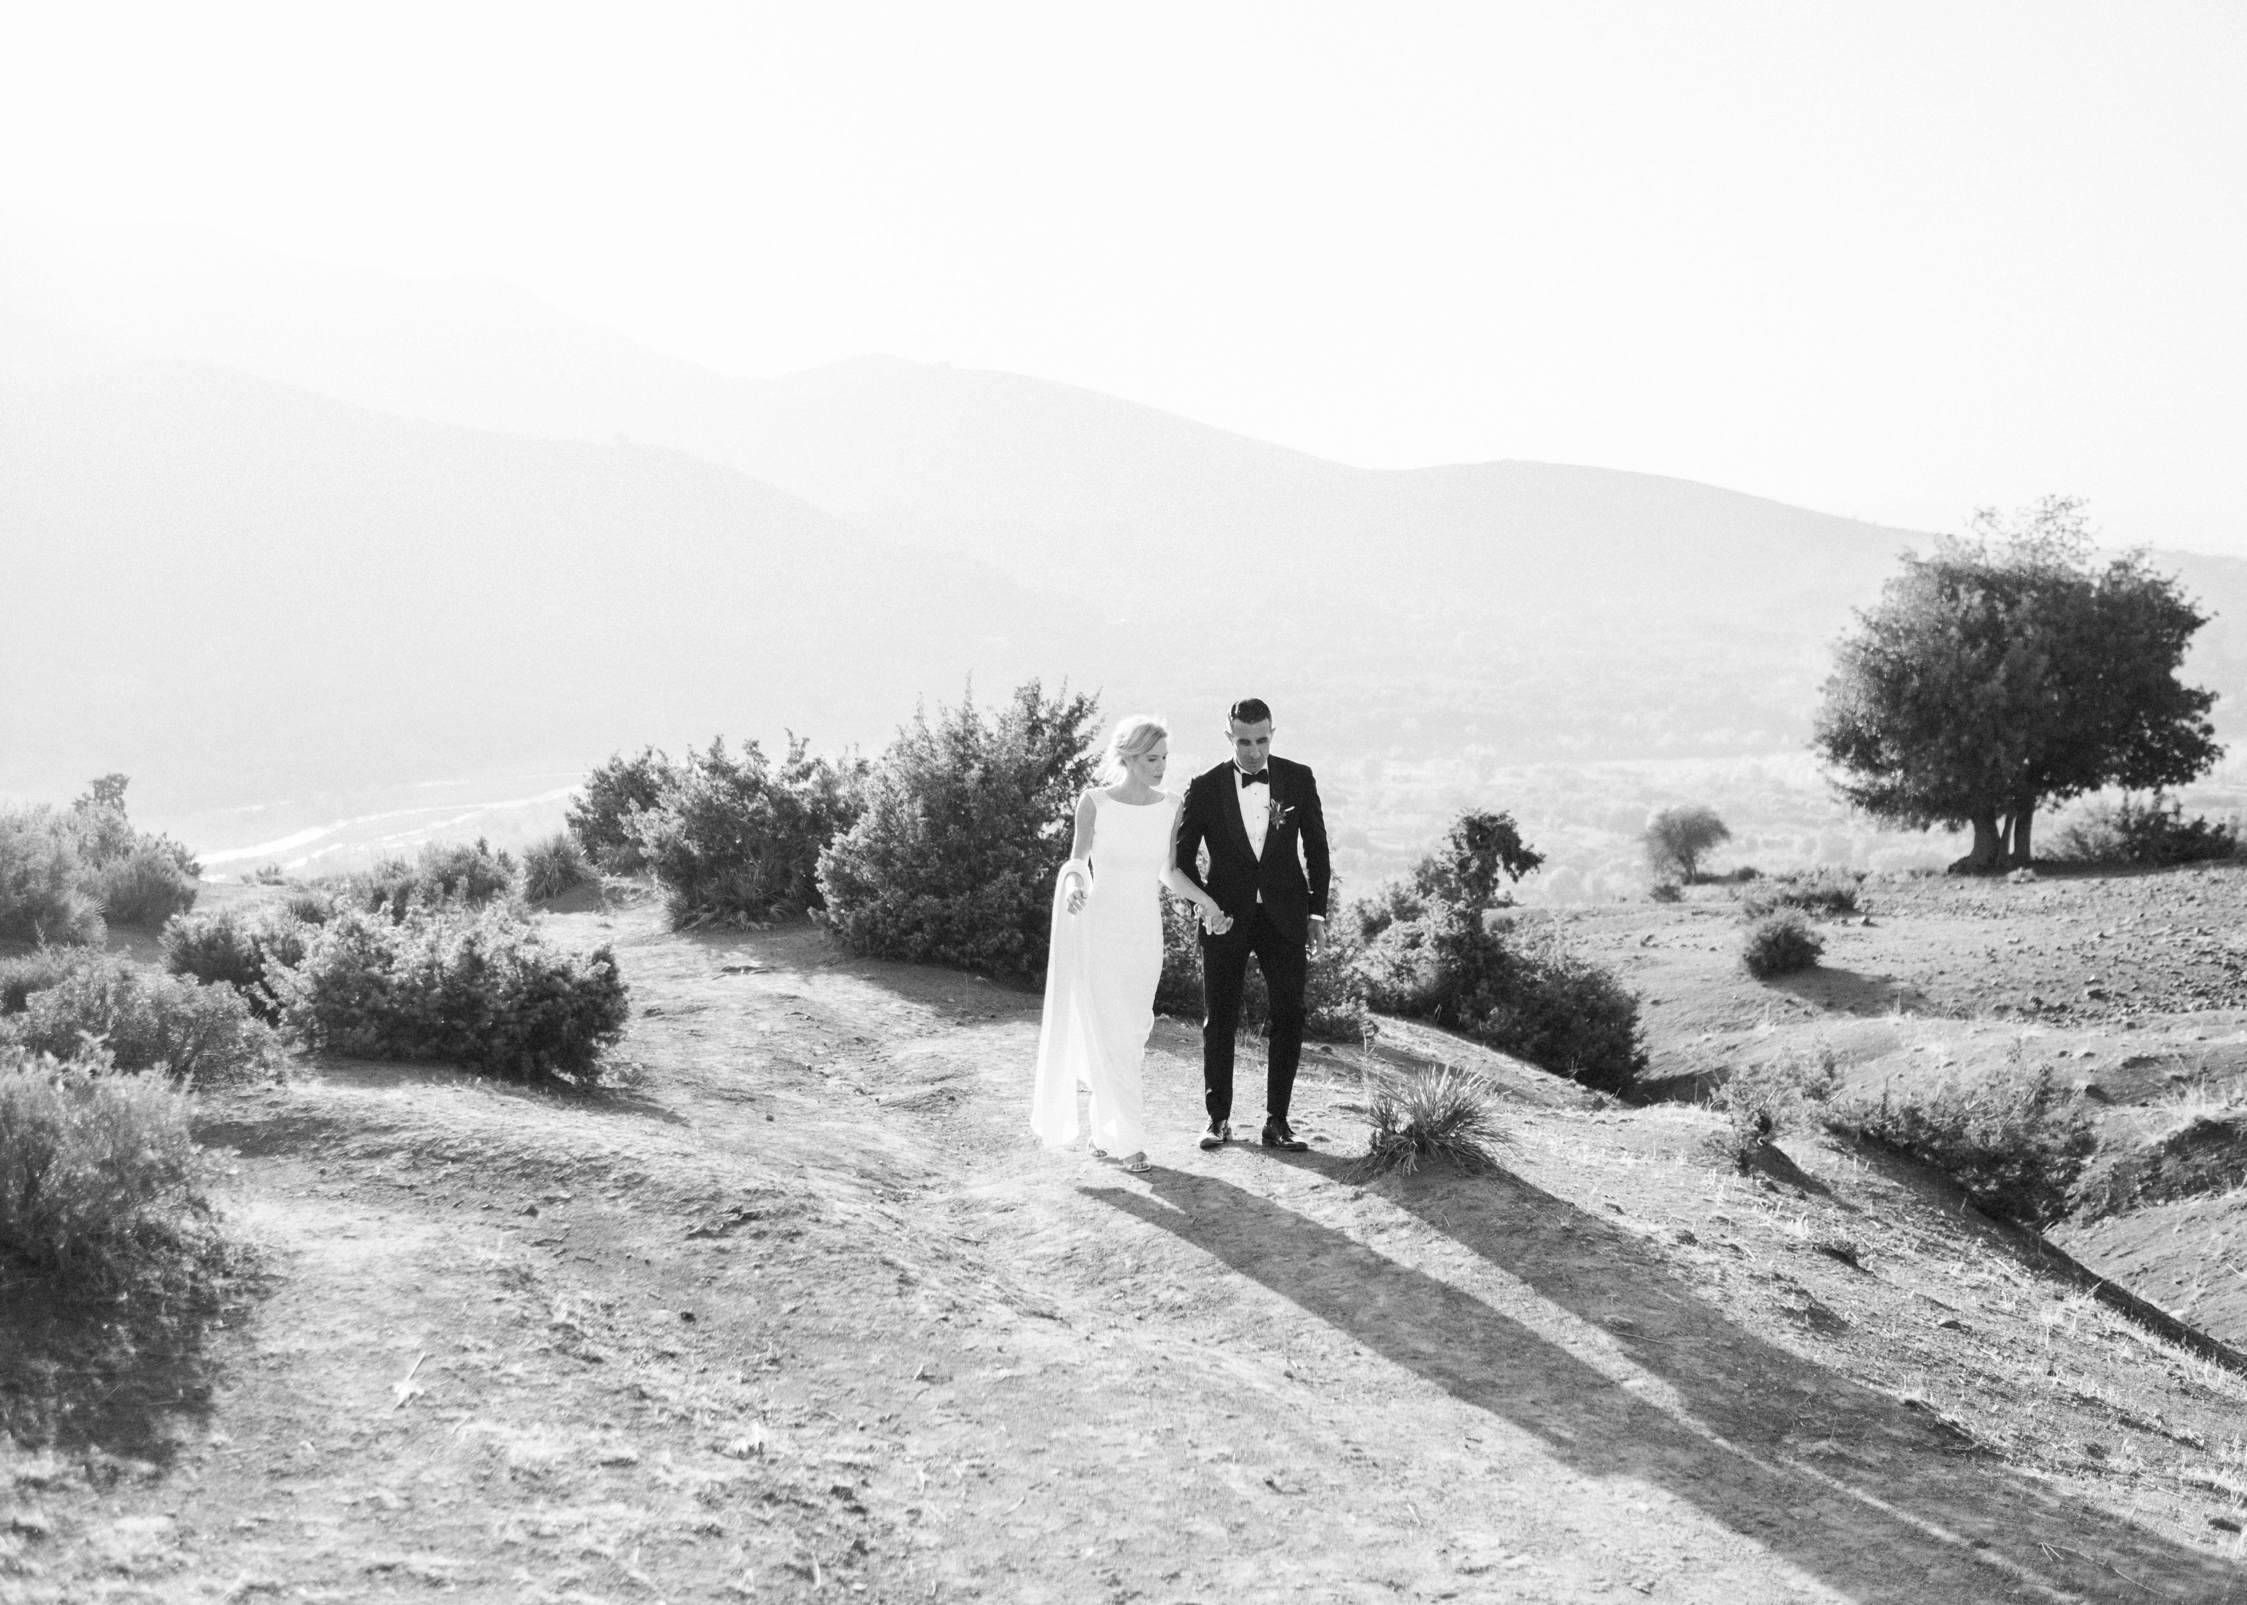 Wedding photographer Ourika Morocco - Love shoot